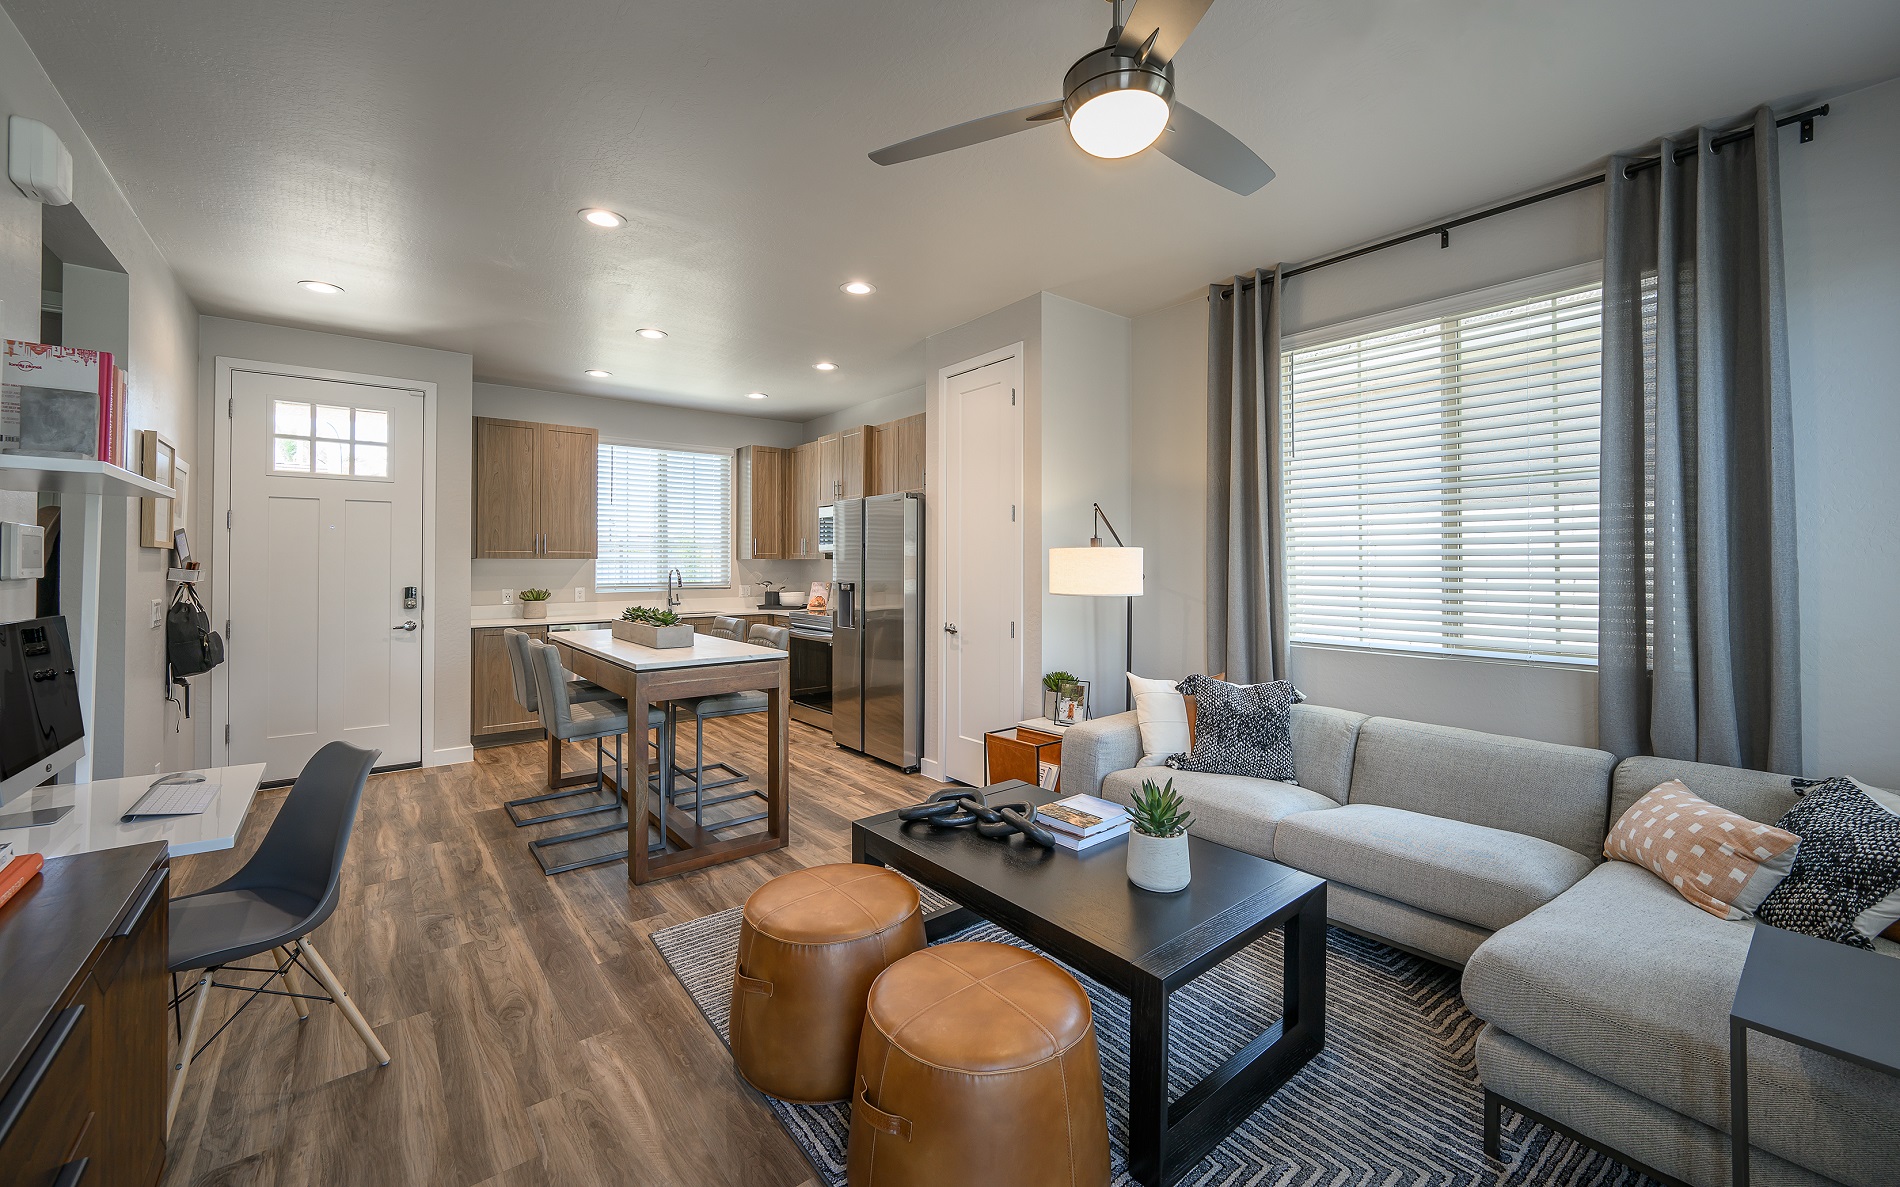 1, 2, 3-Bedroom Apartments for Rent in Avondale, AZ